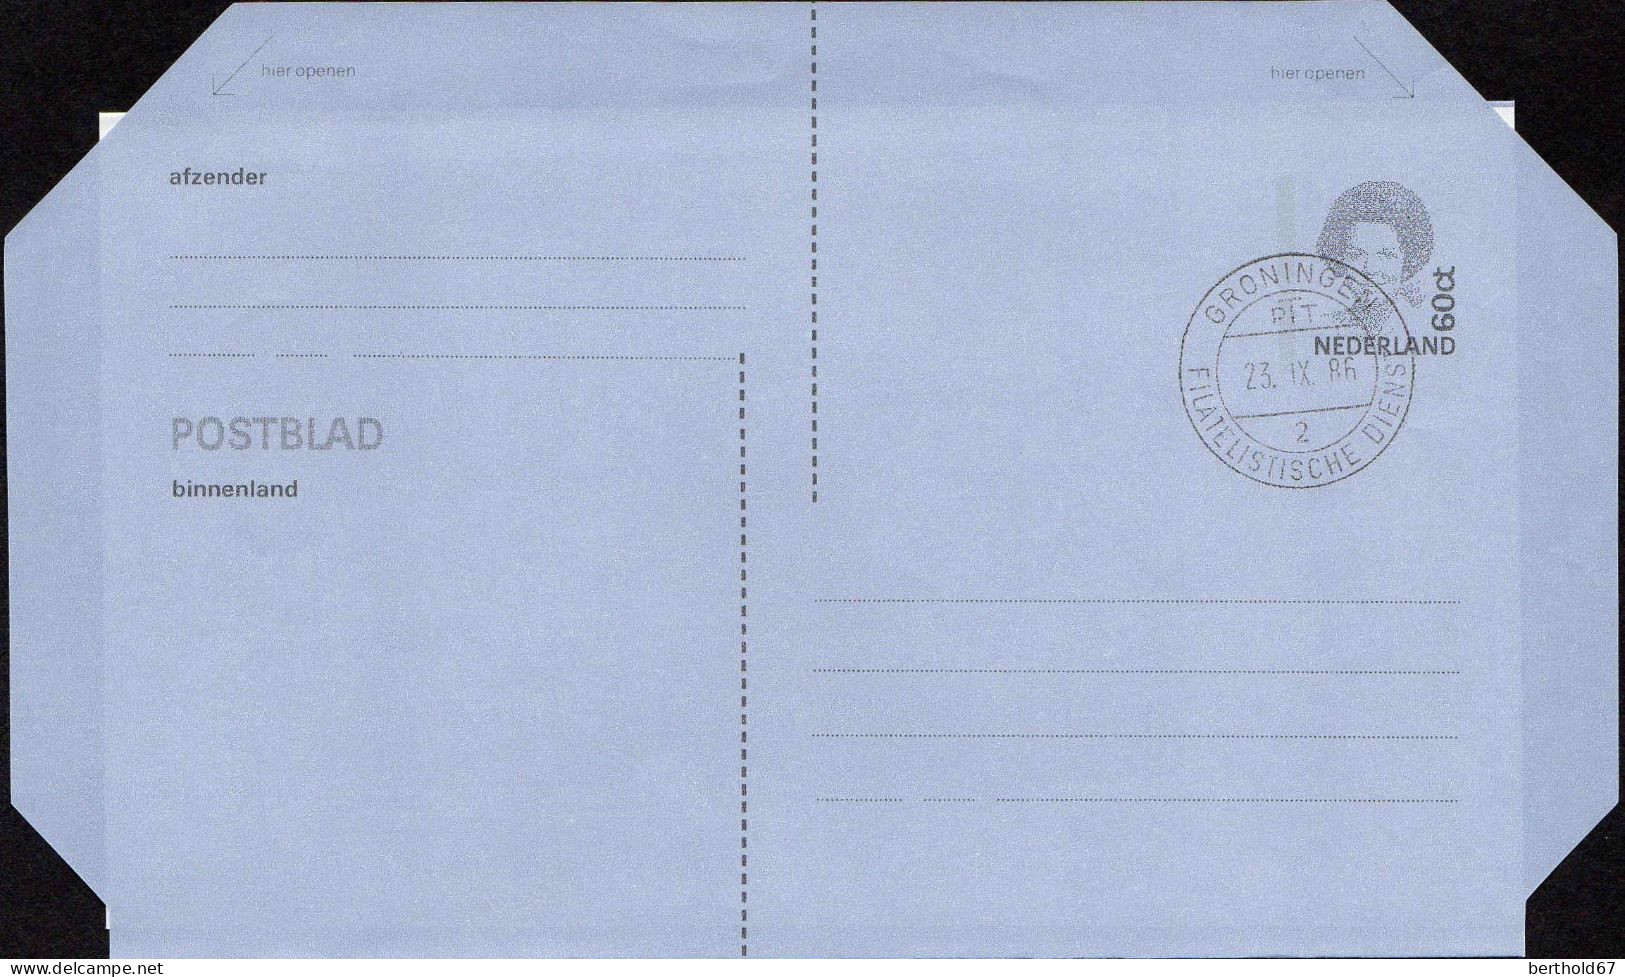 Pays-Bas Aérogr Obl (57) Postblad Binnenland 55ct Reine Beatrix (TB Cachet à Date) 60ct Bande Phosphore 28x2mm - Ganzsachen